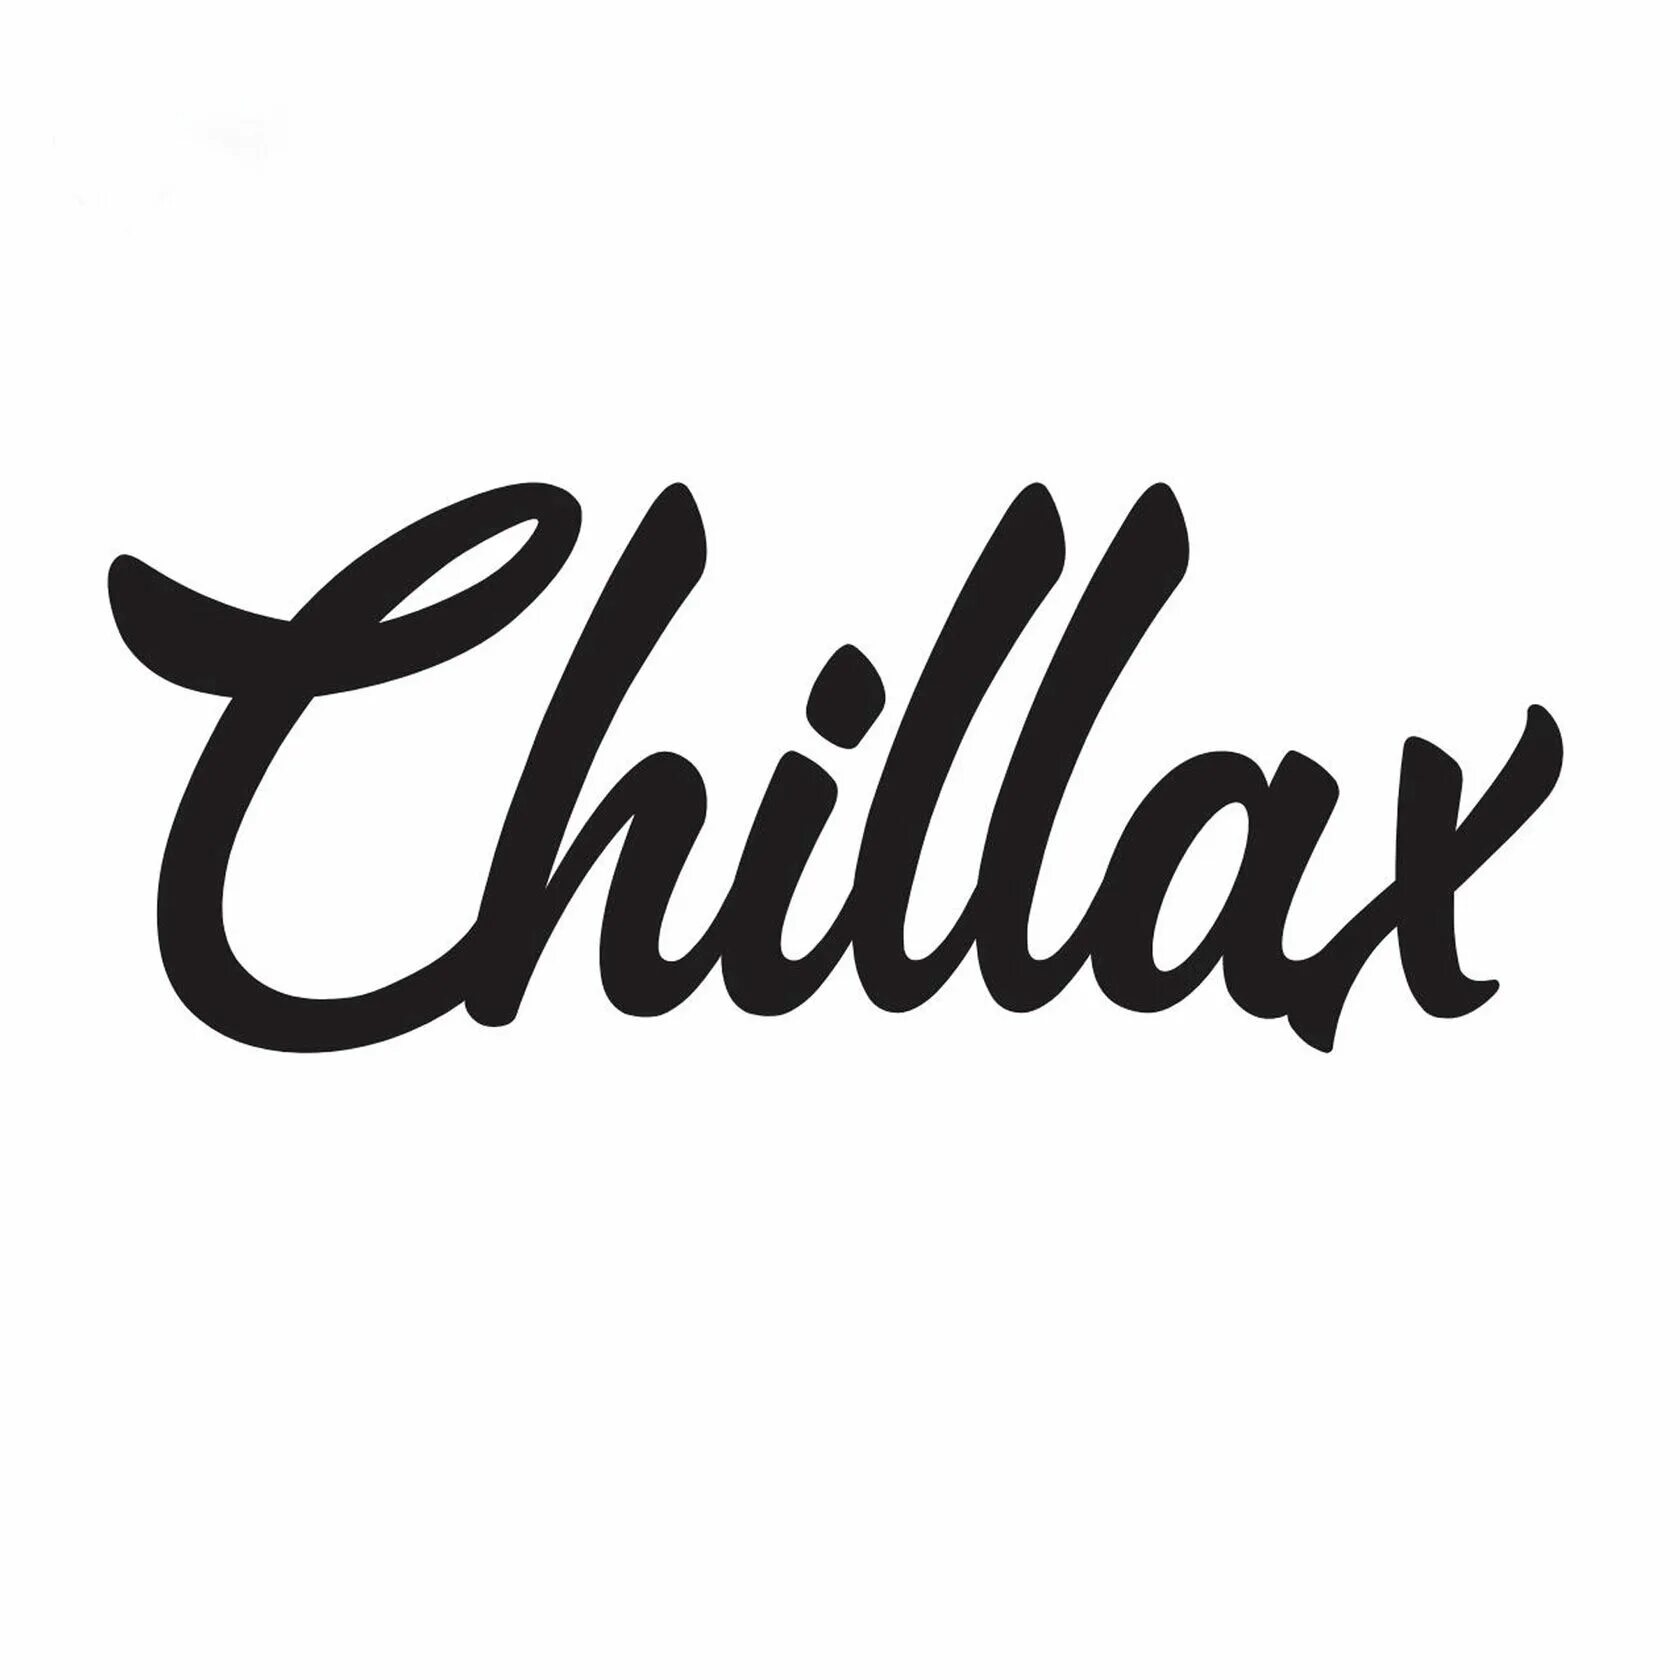 Chillax электронная сигарета. Chillax логотип. Логотип электронных сигарет. Chillax 1200. Chillax купить москва